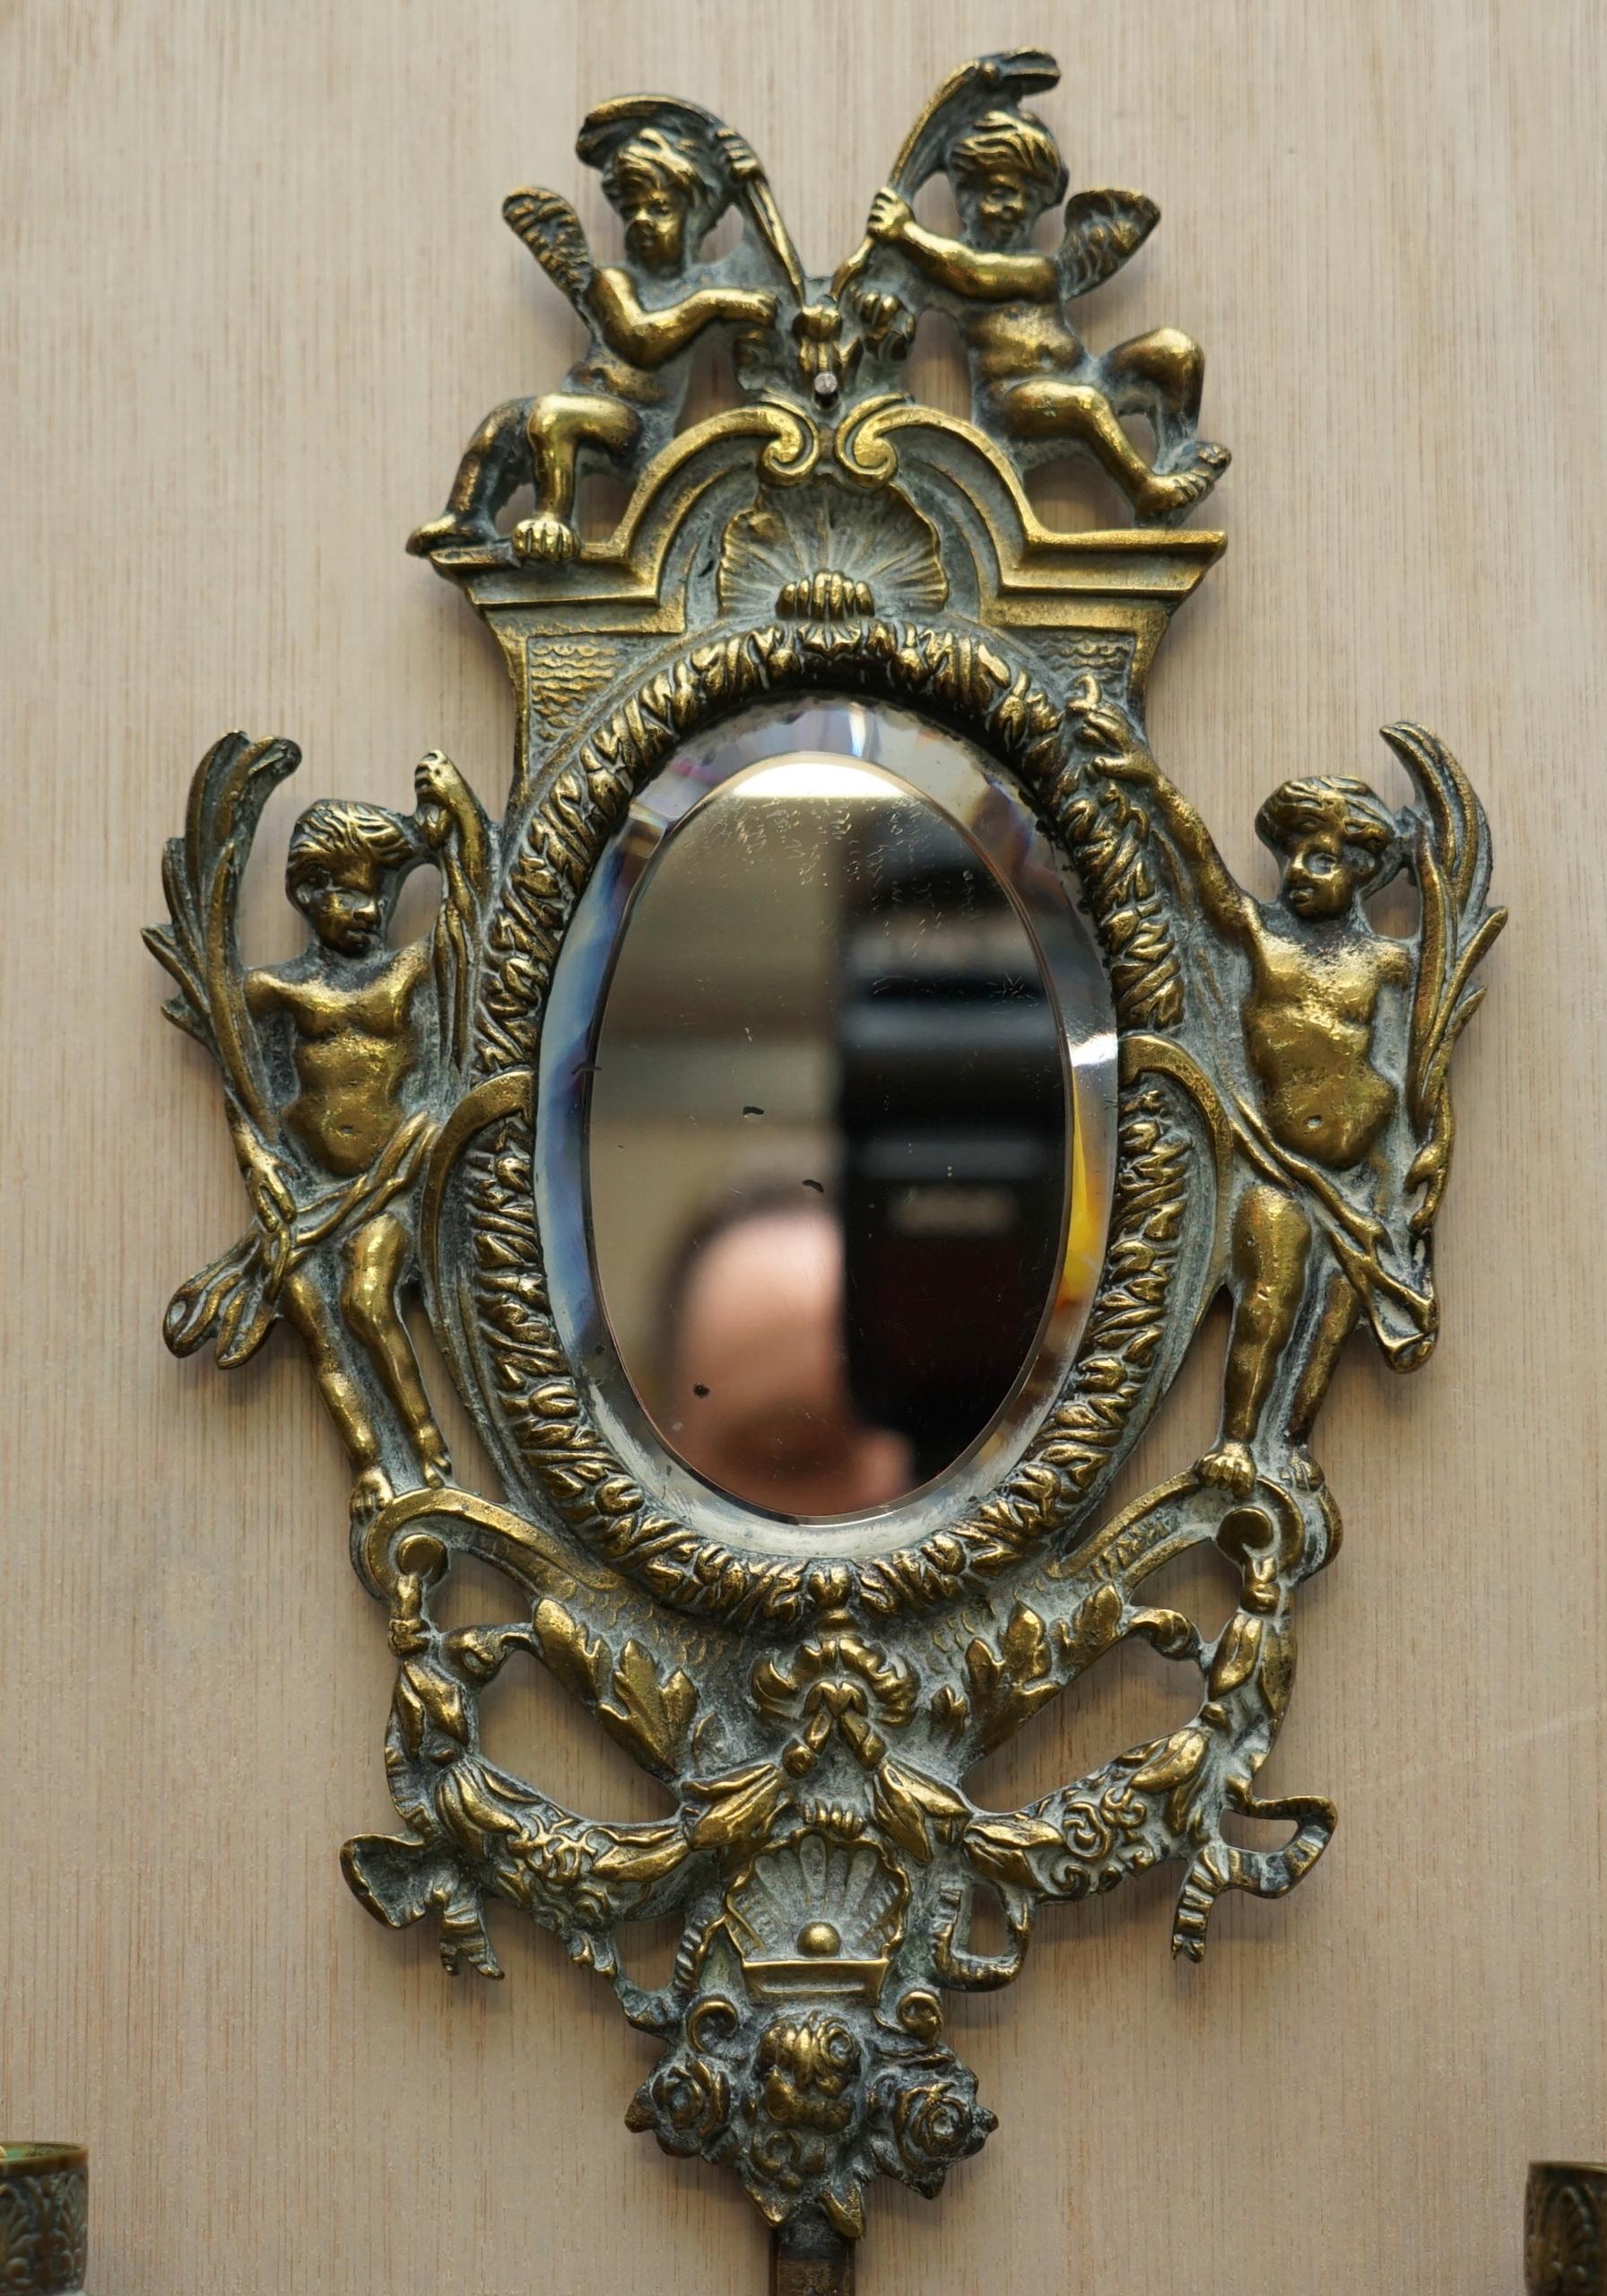 Hand-Crafted Pair of Antique French Rococo Cherub Brass Girandole Mirrors Candelabra Sconces